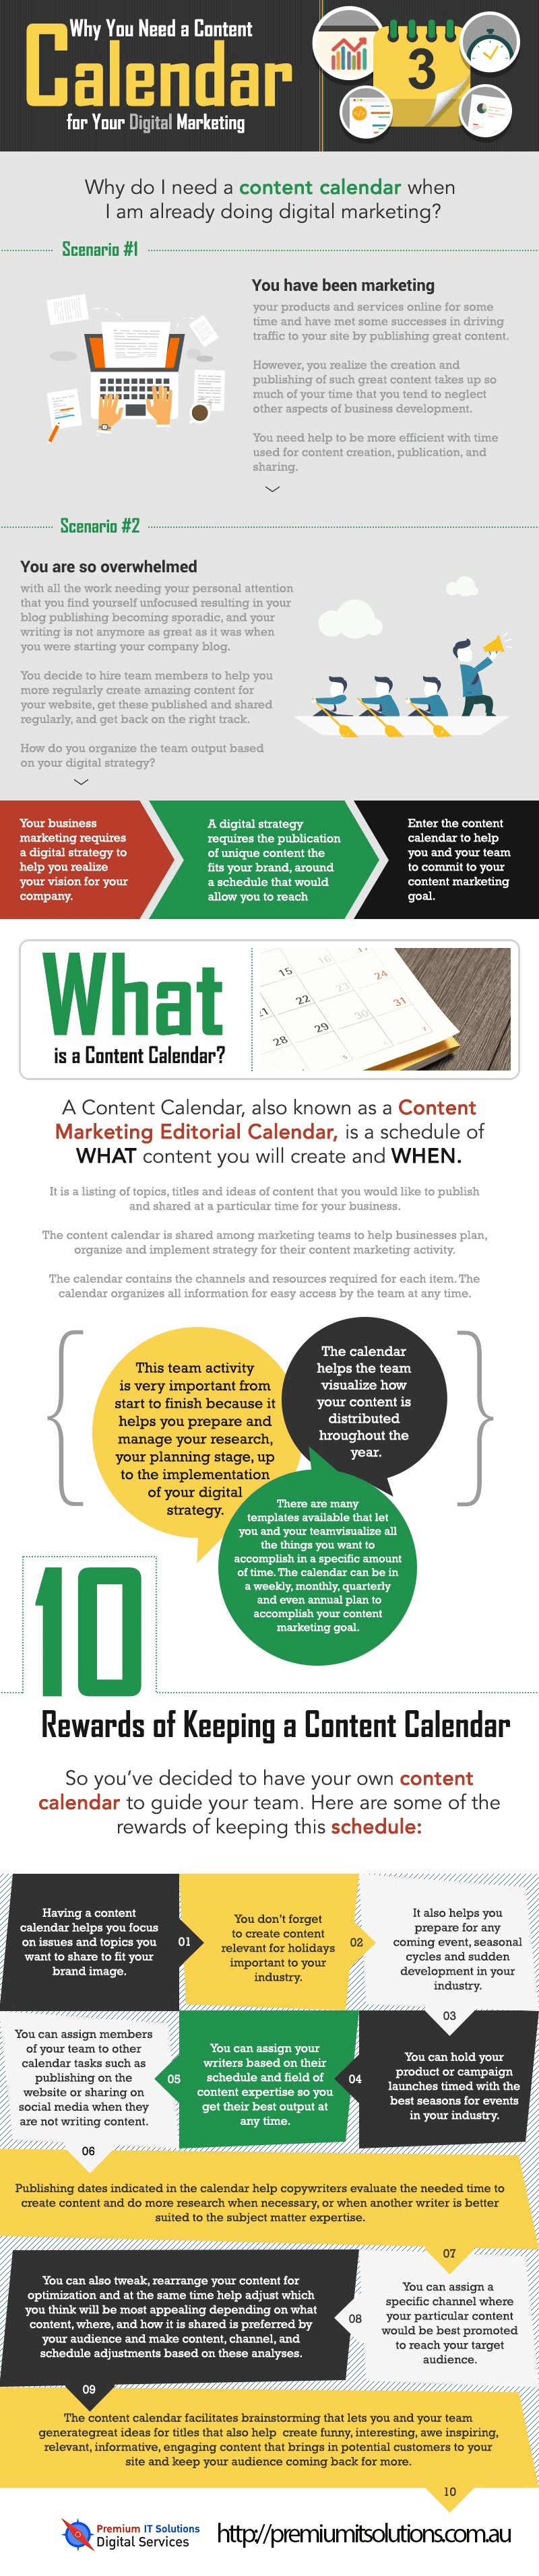 Content Calendar Infographic